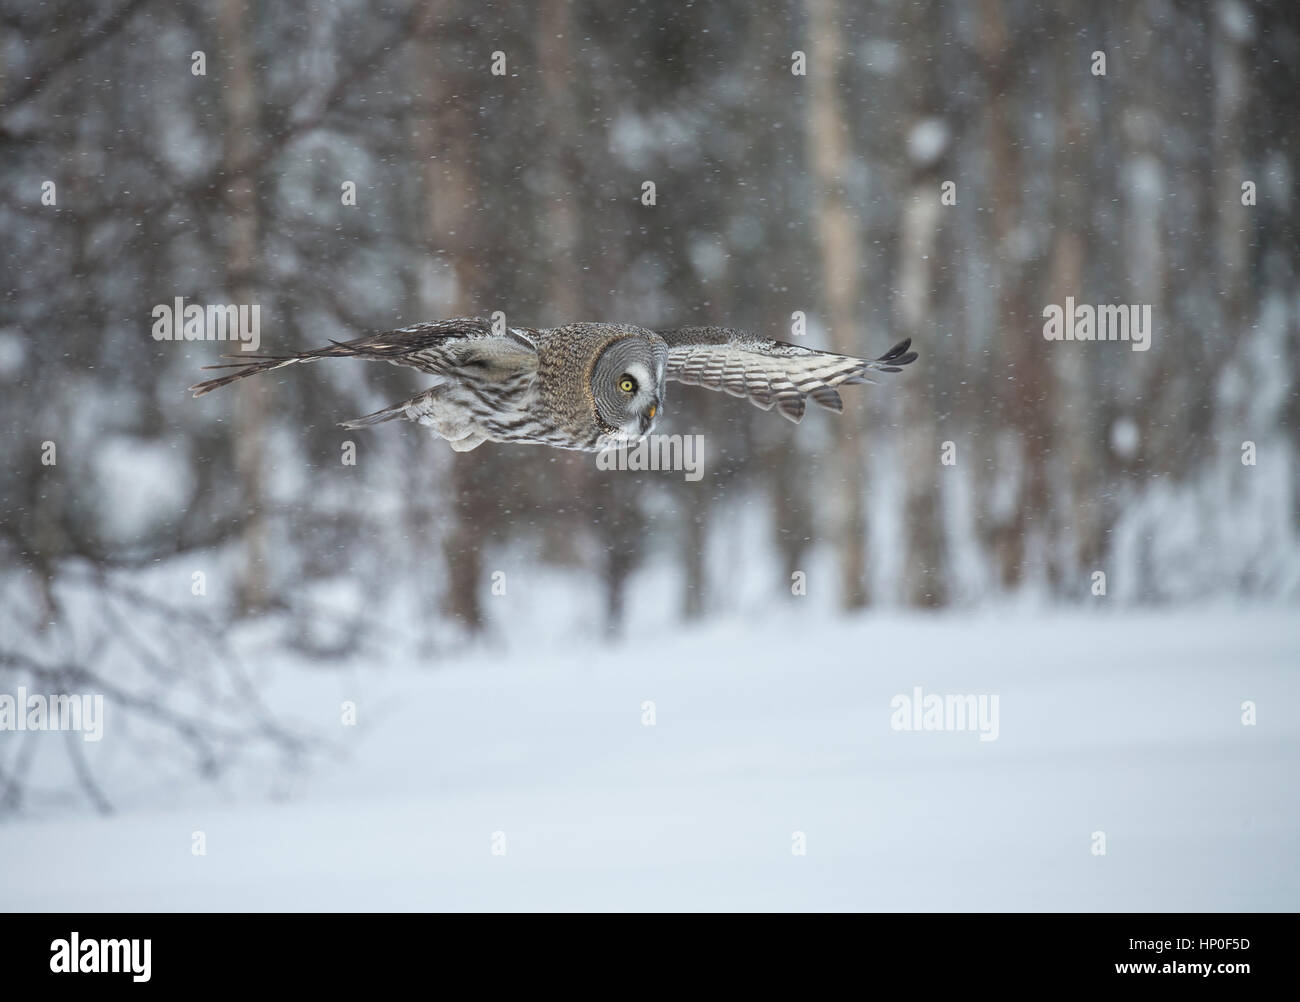 Great grey owl (strix nebulosa) gliding through a snowy forest as it hunts Stock Photo